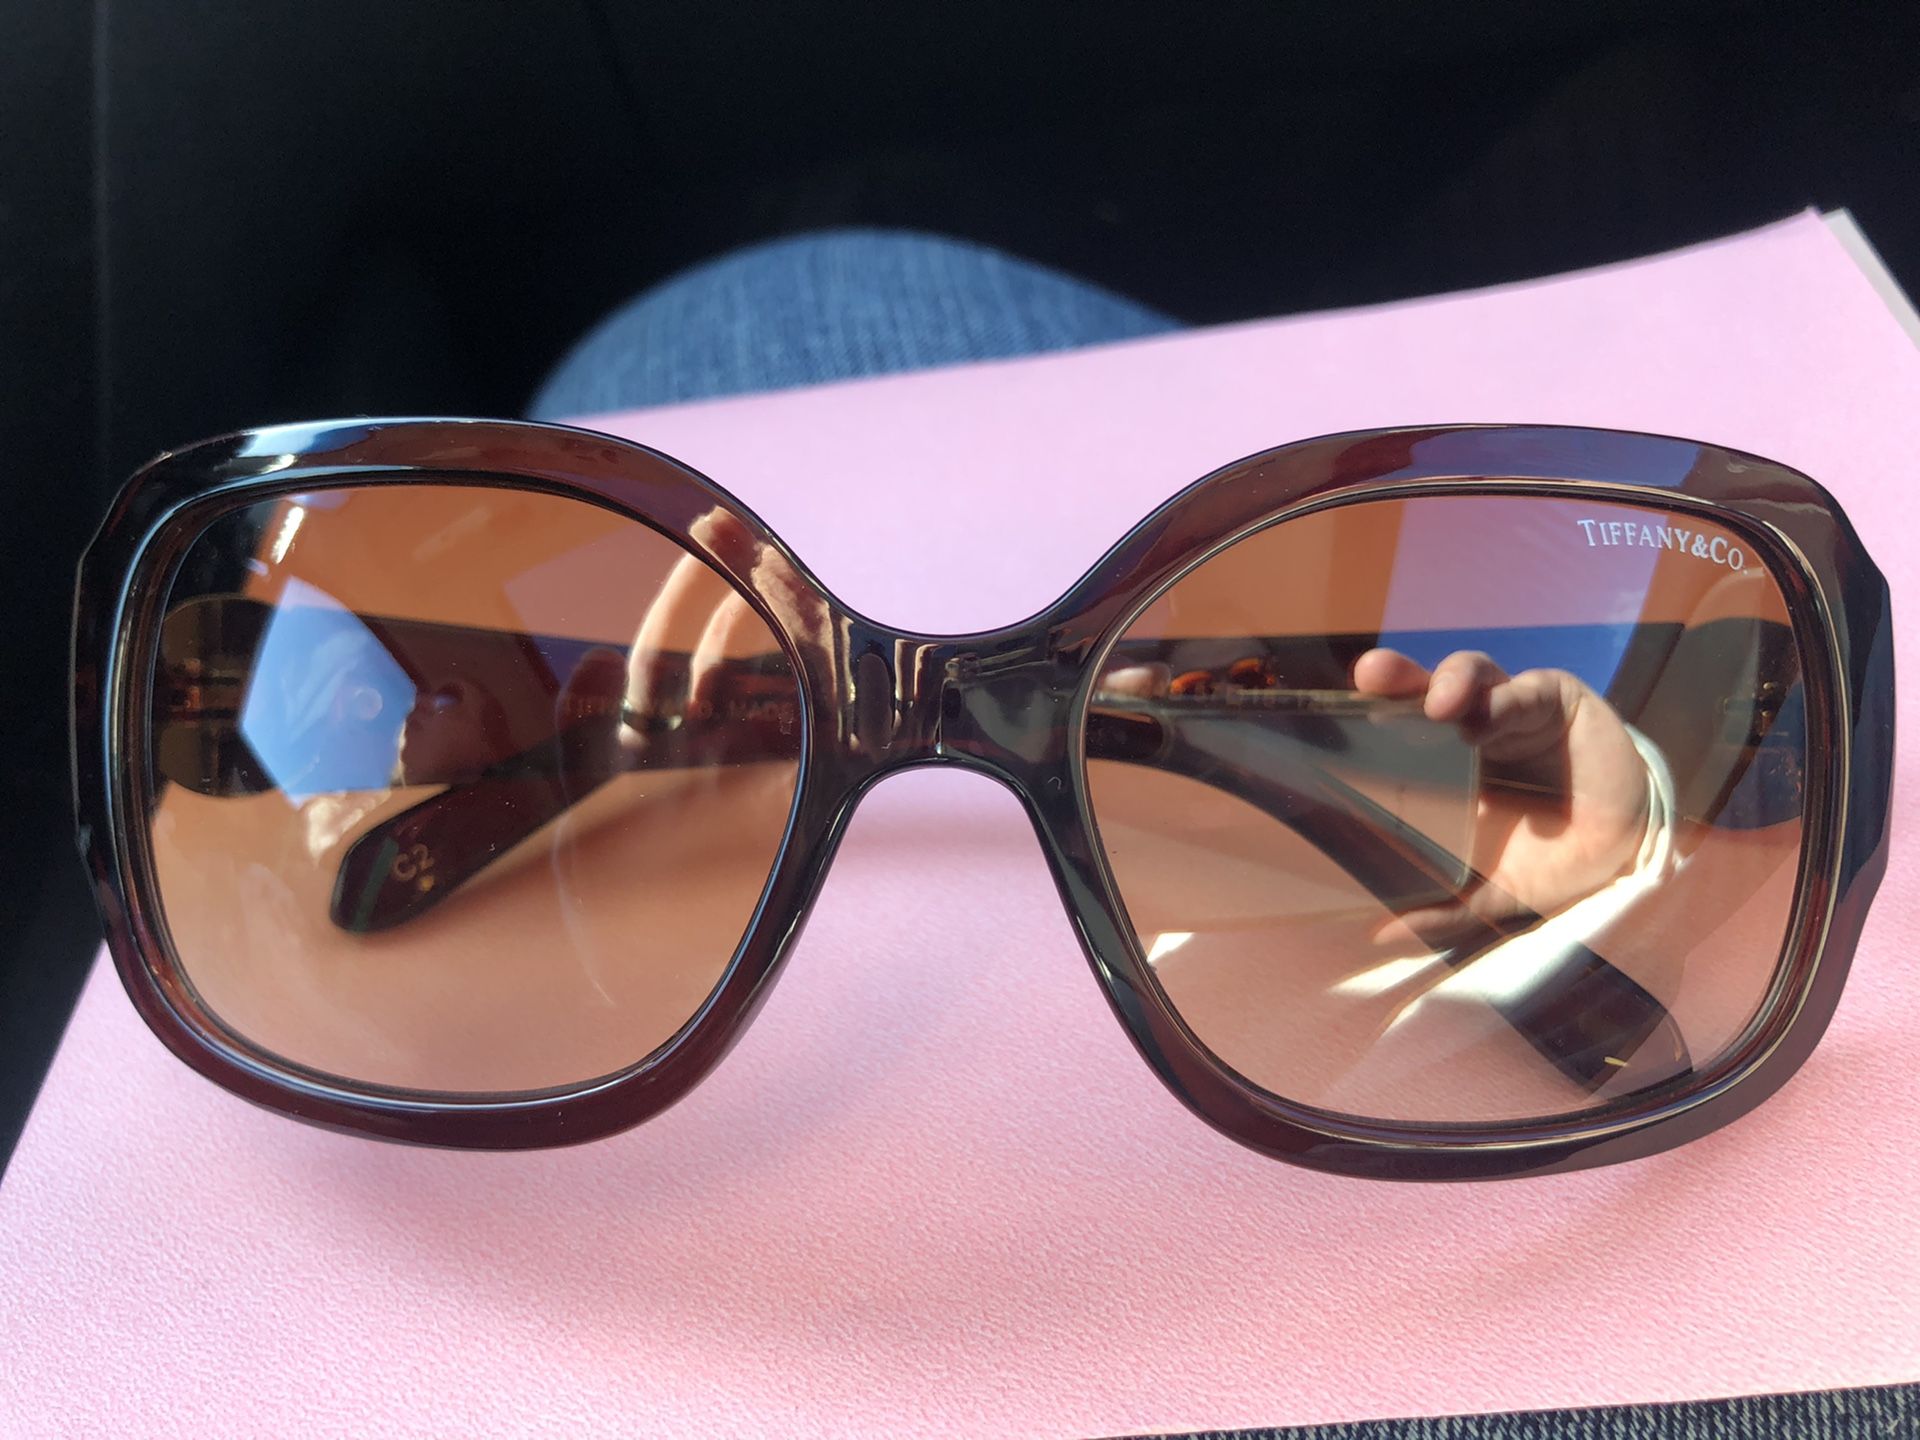 Tiffany & Co sunglasses